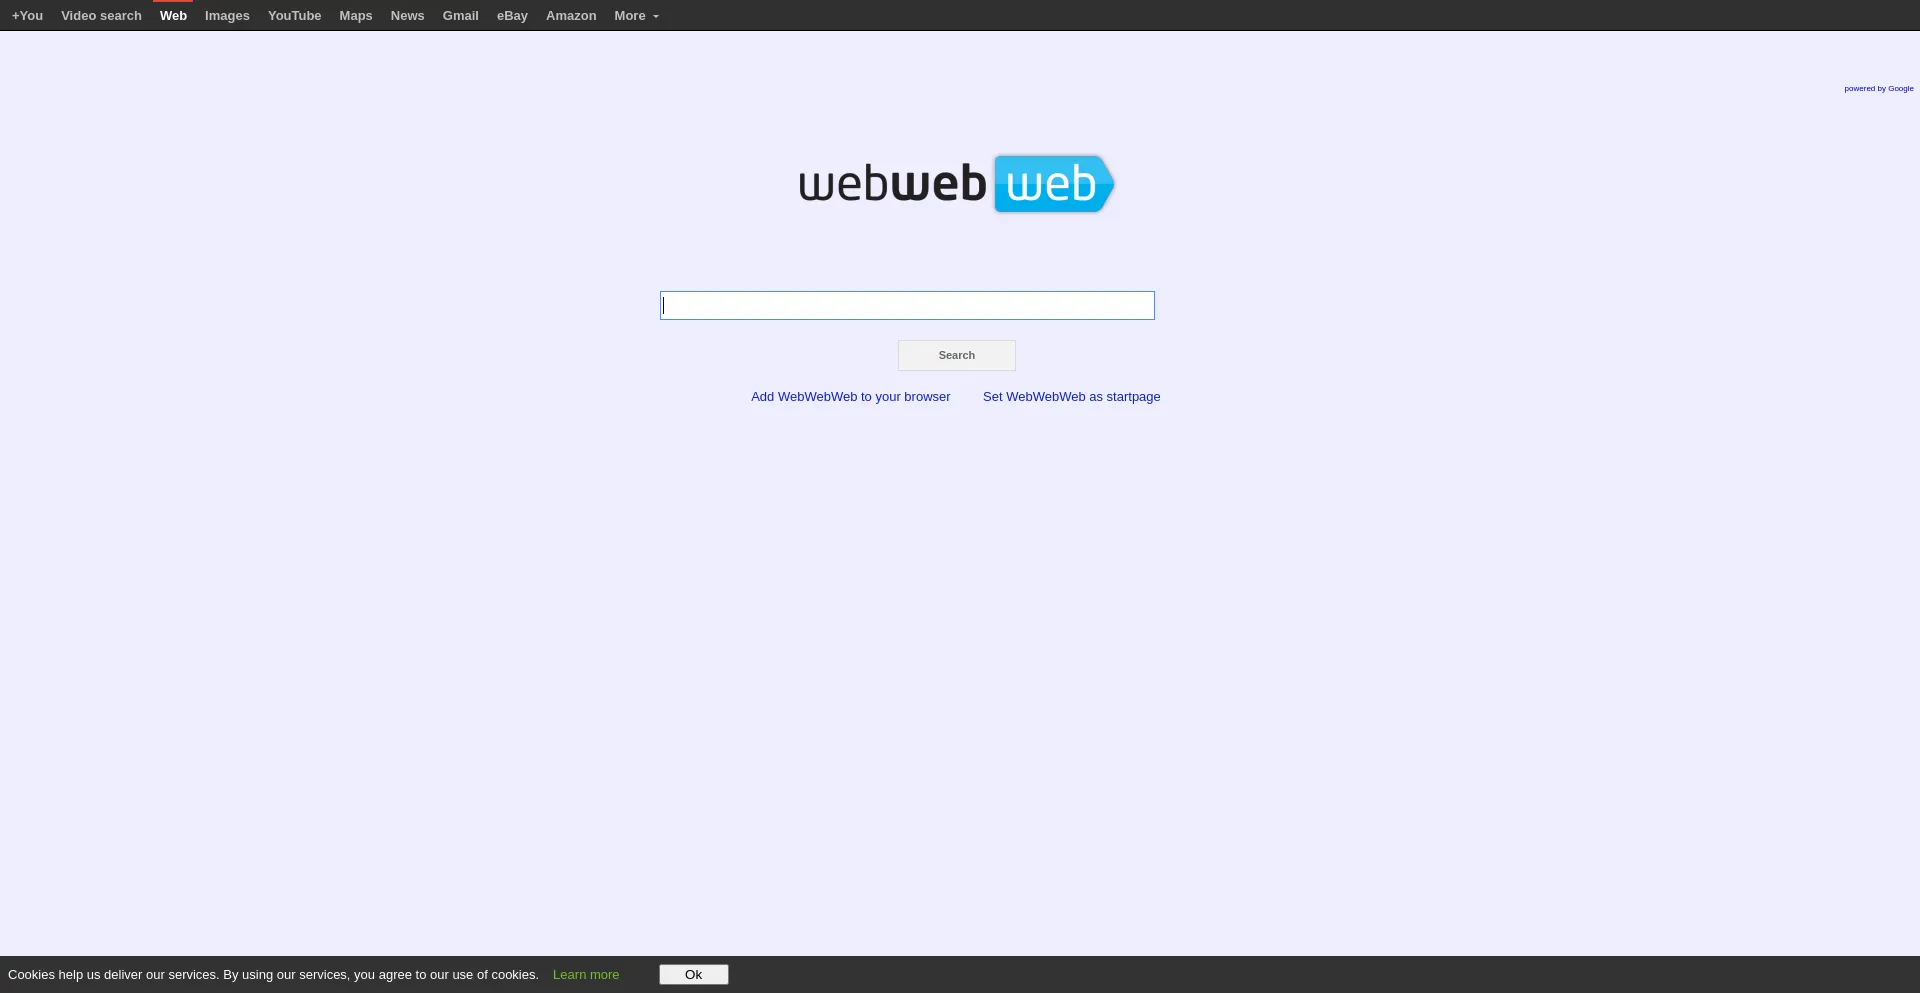 Webwebweb.com